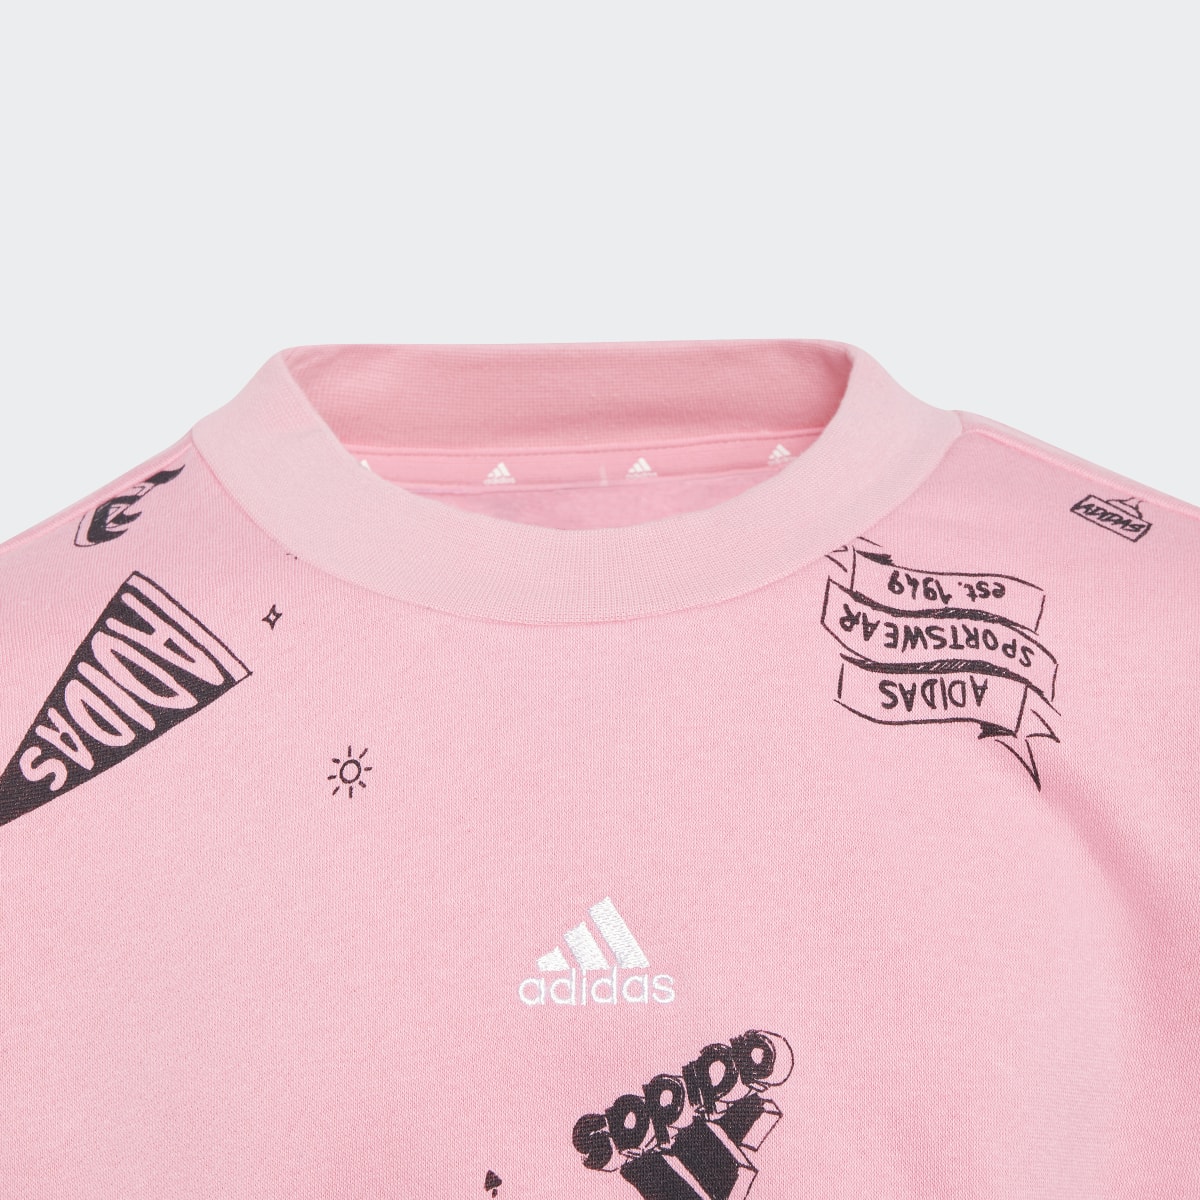 Adidas Brand Love Allover Print Kids Sweatshirt. 4